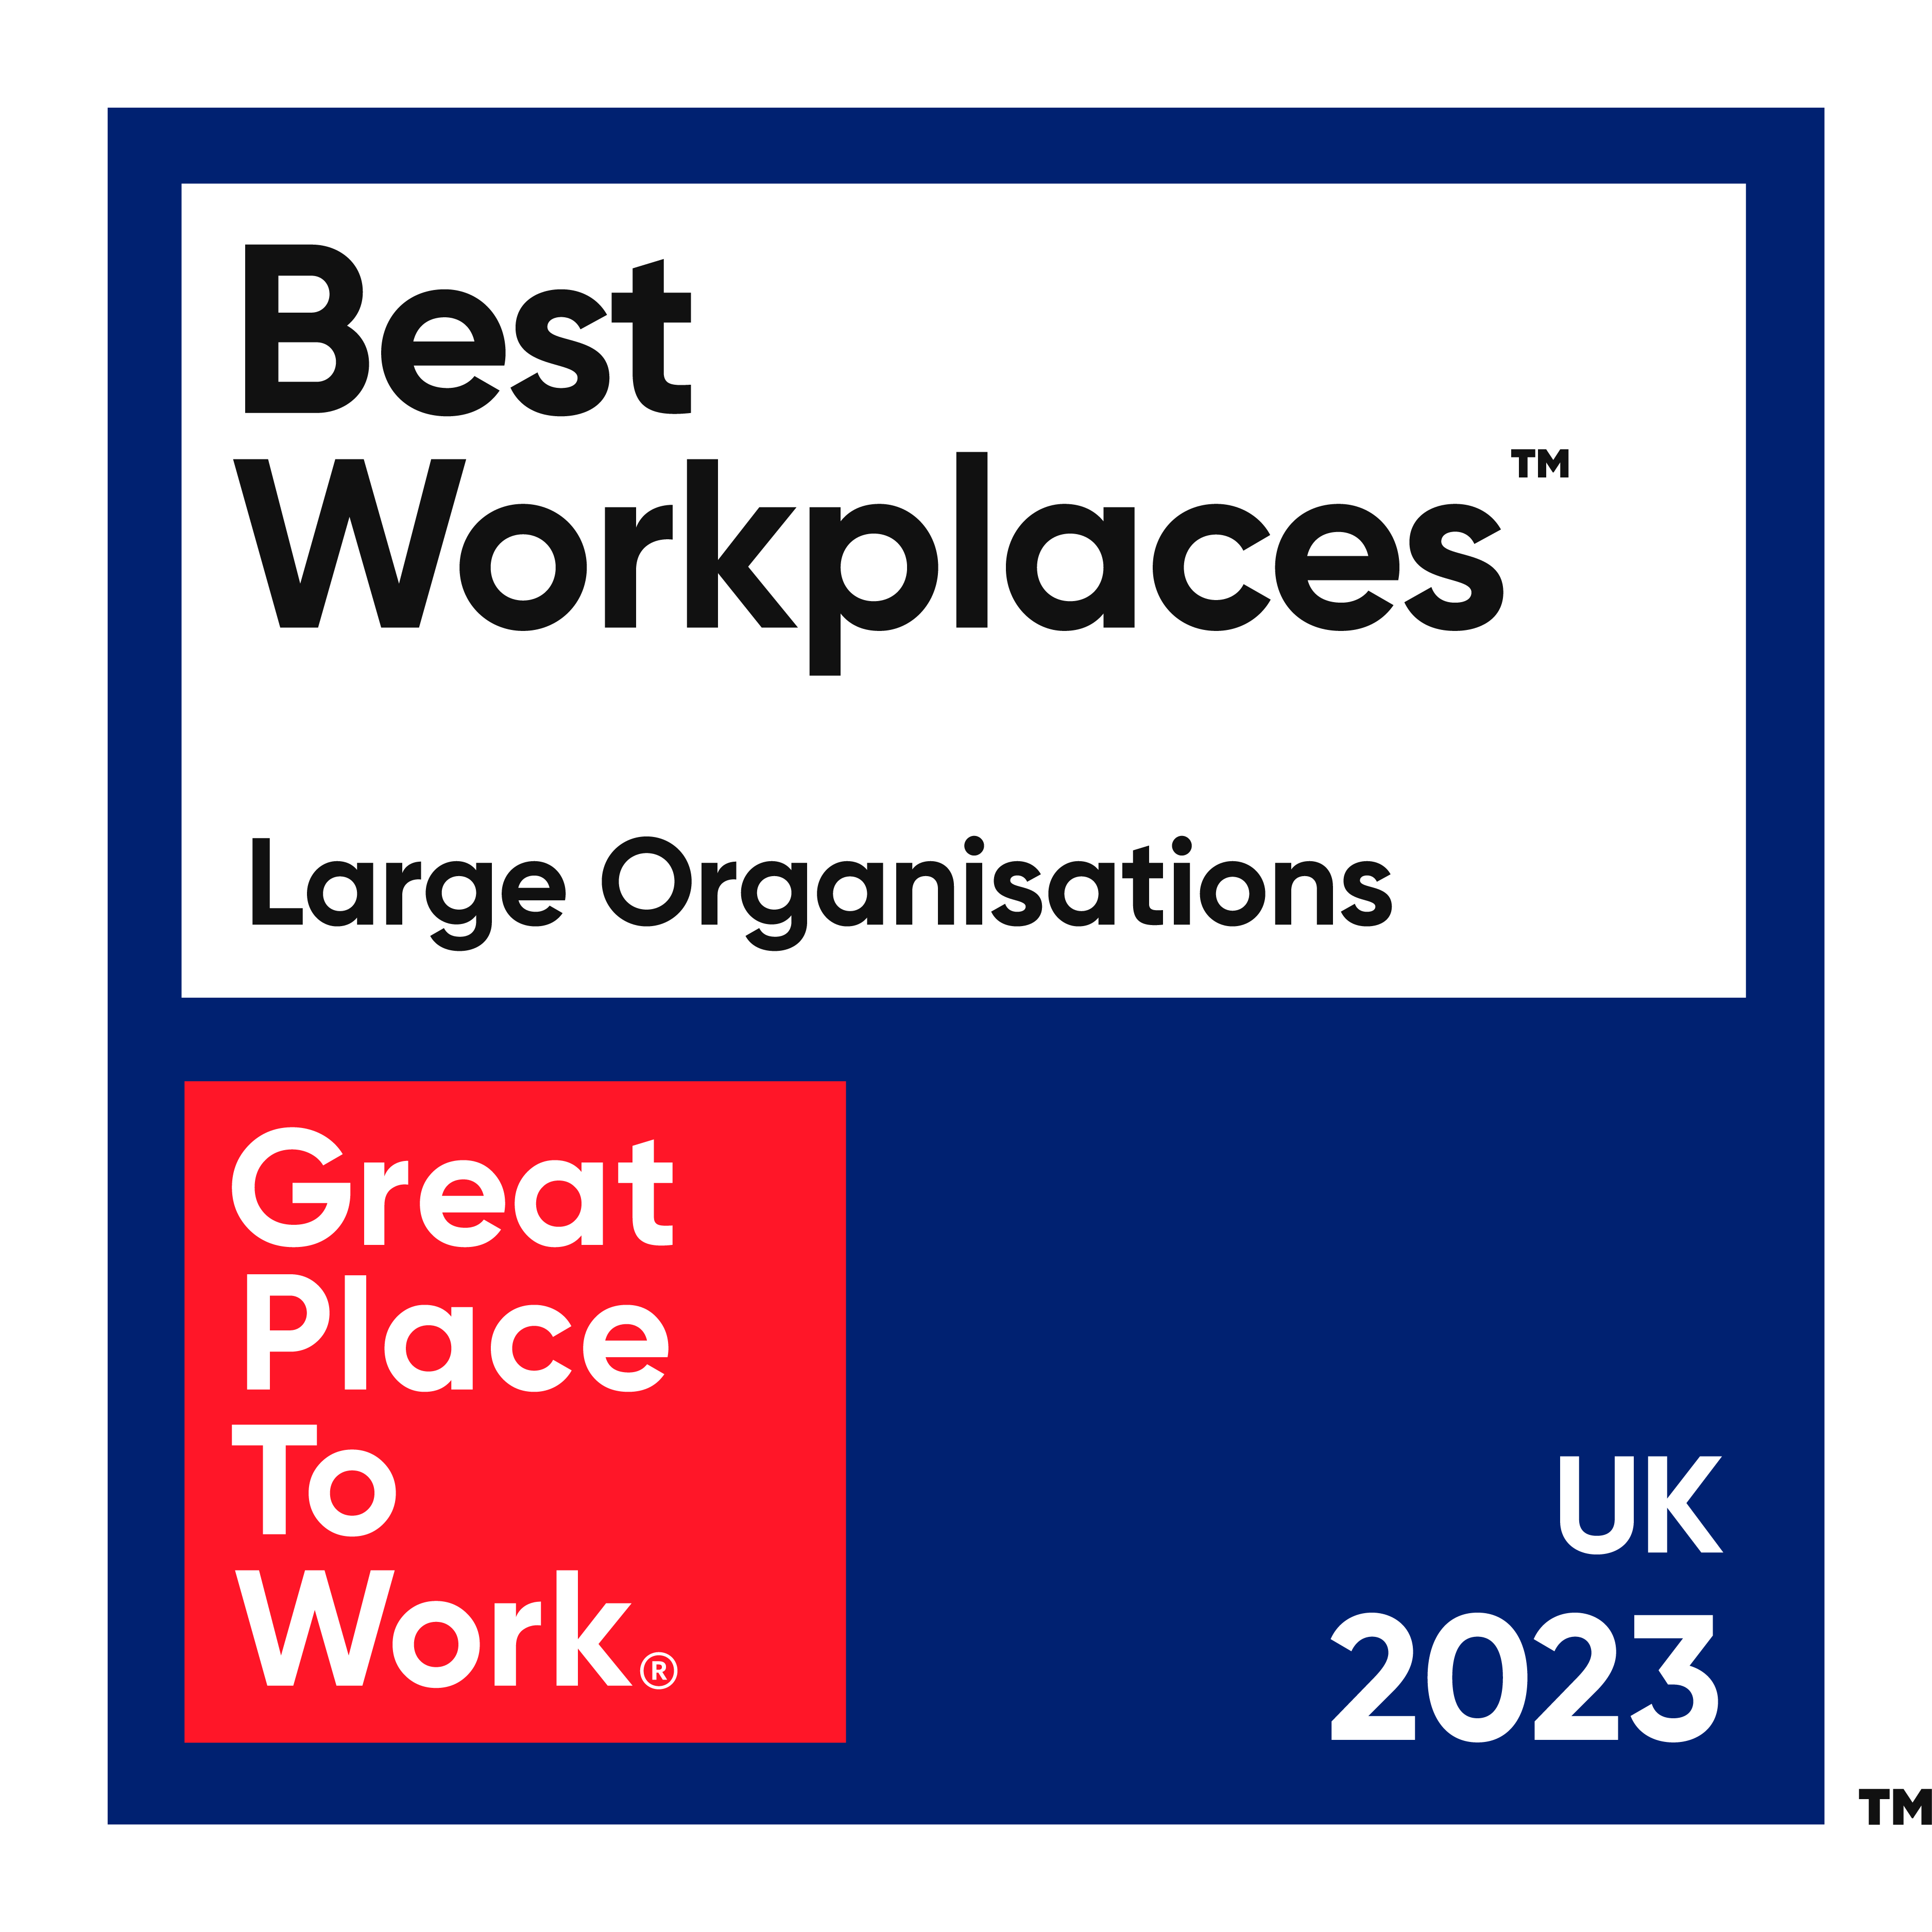 Best Workplaces Logo